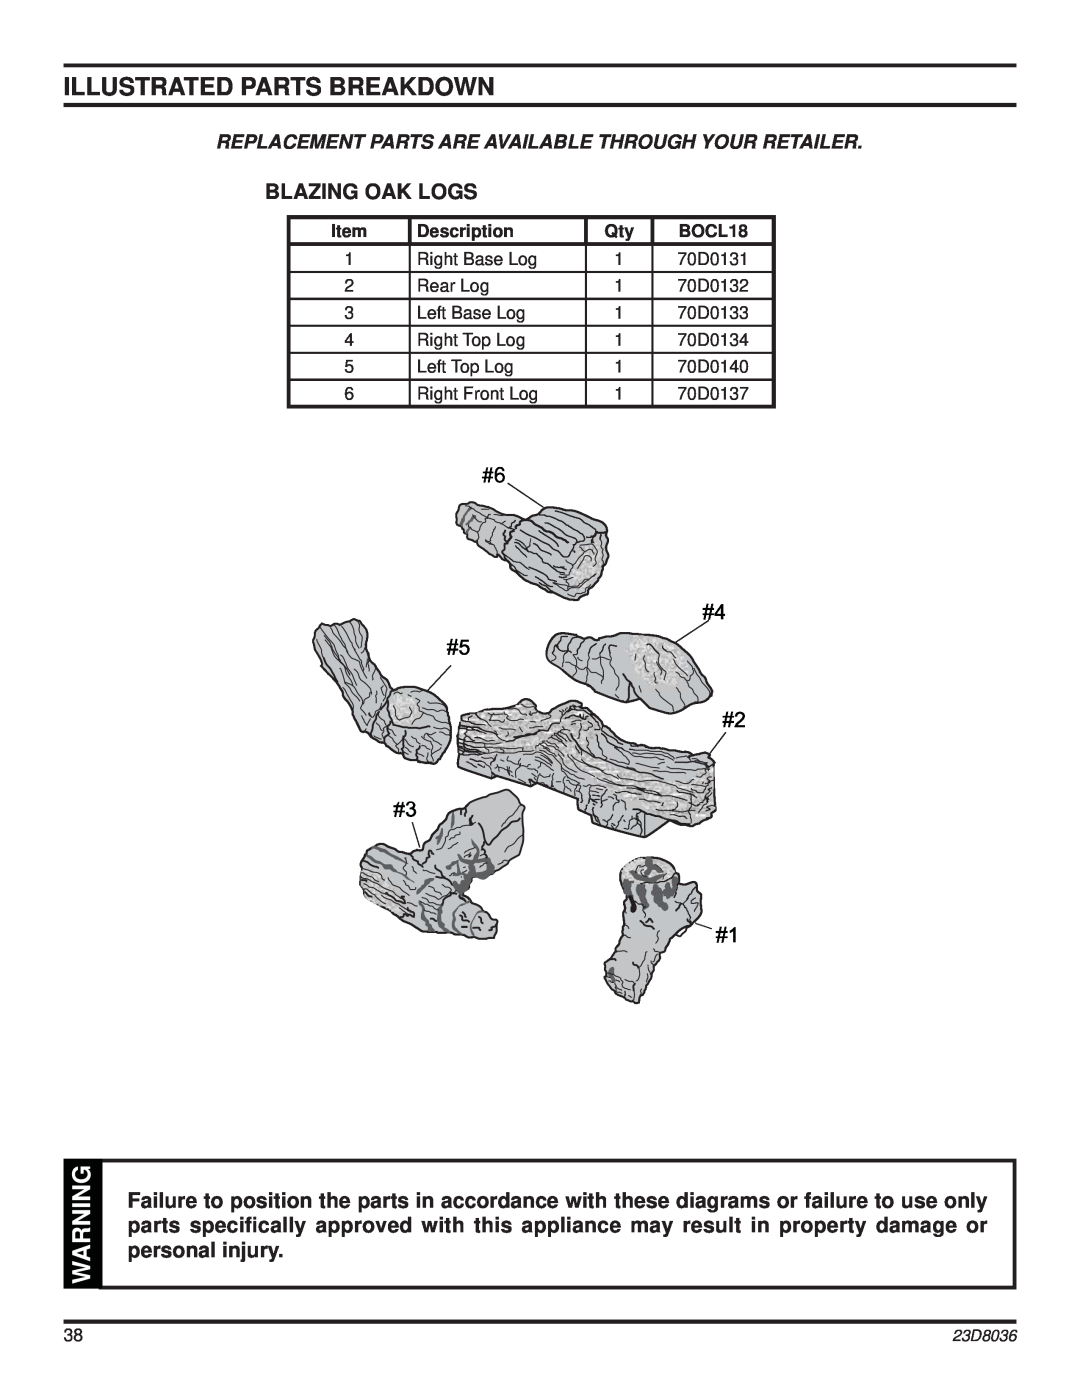 MartinLogan 33ISDG operating instructions Blazing Oak Logs, Illustrated Parts Breakdown, #6 #4 #5 #2, Description, BOCL18 